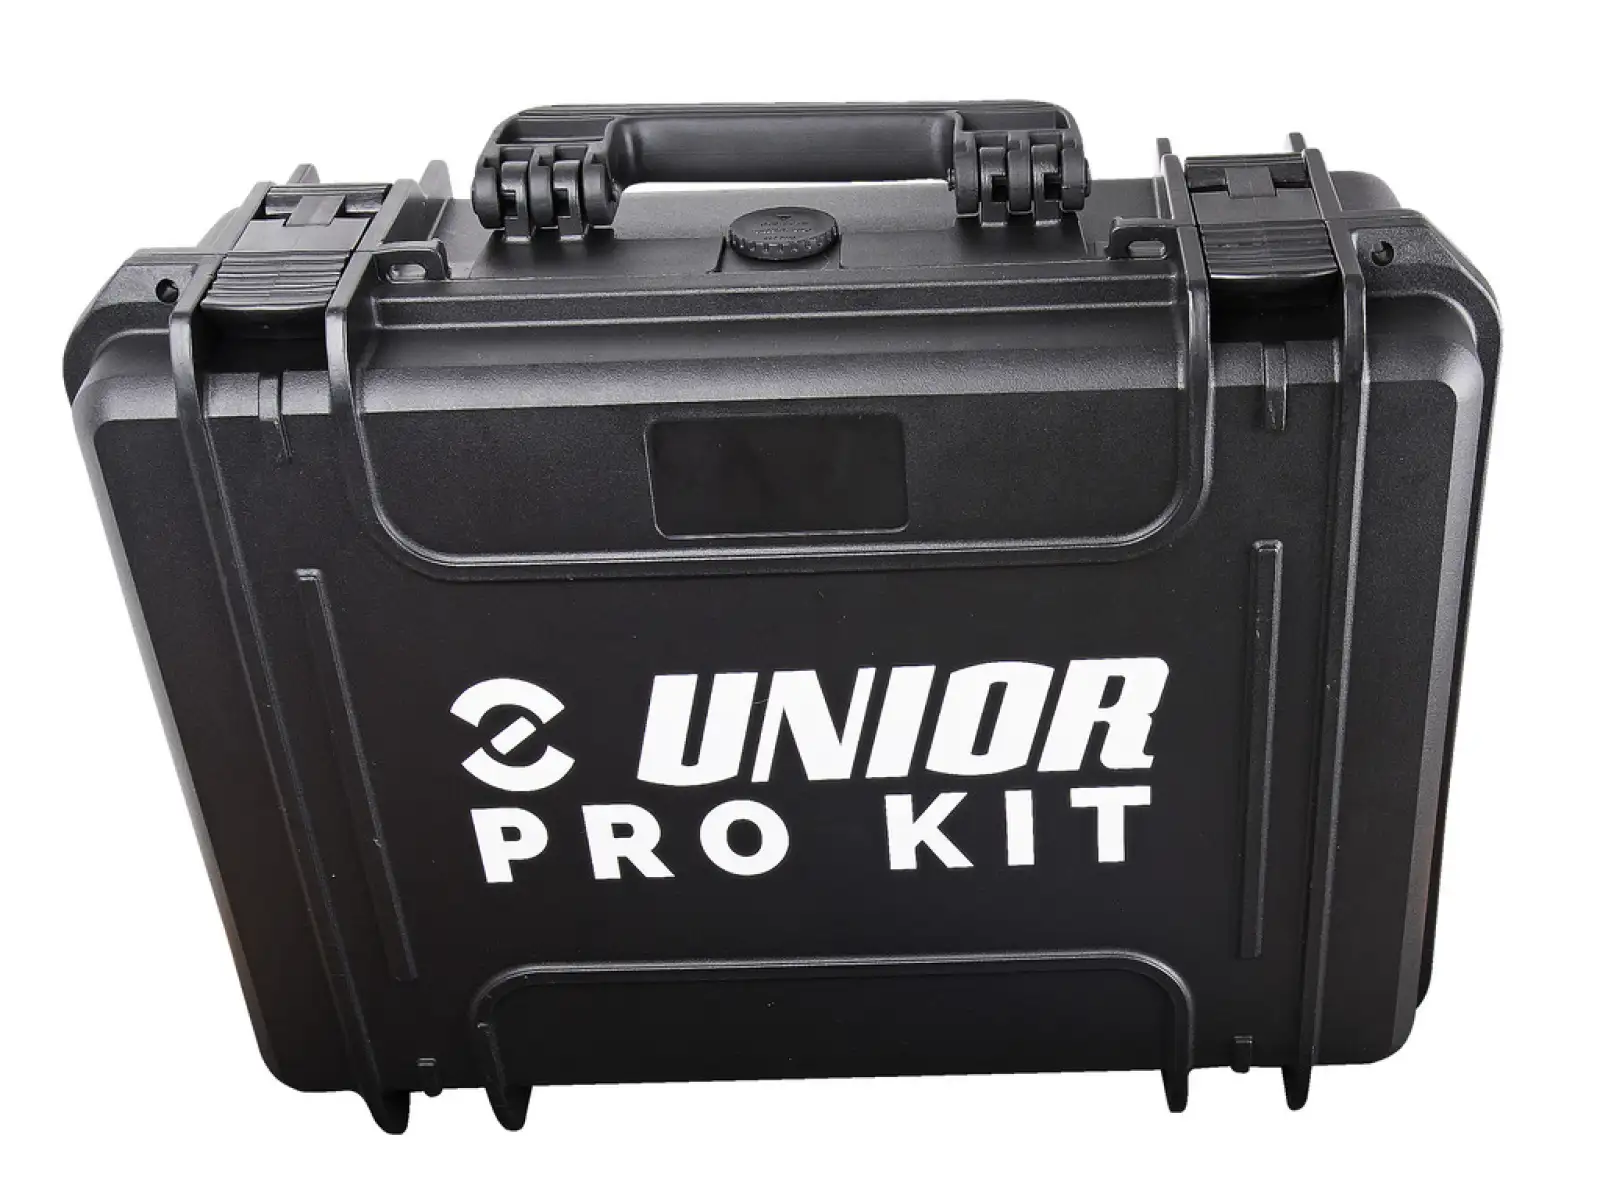 Súprava nástrojov Unior Pro Kit